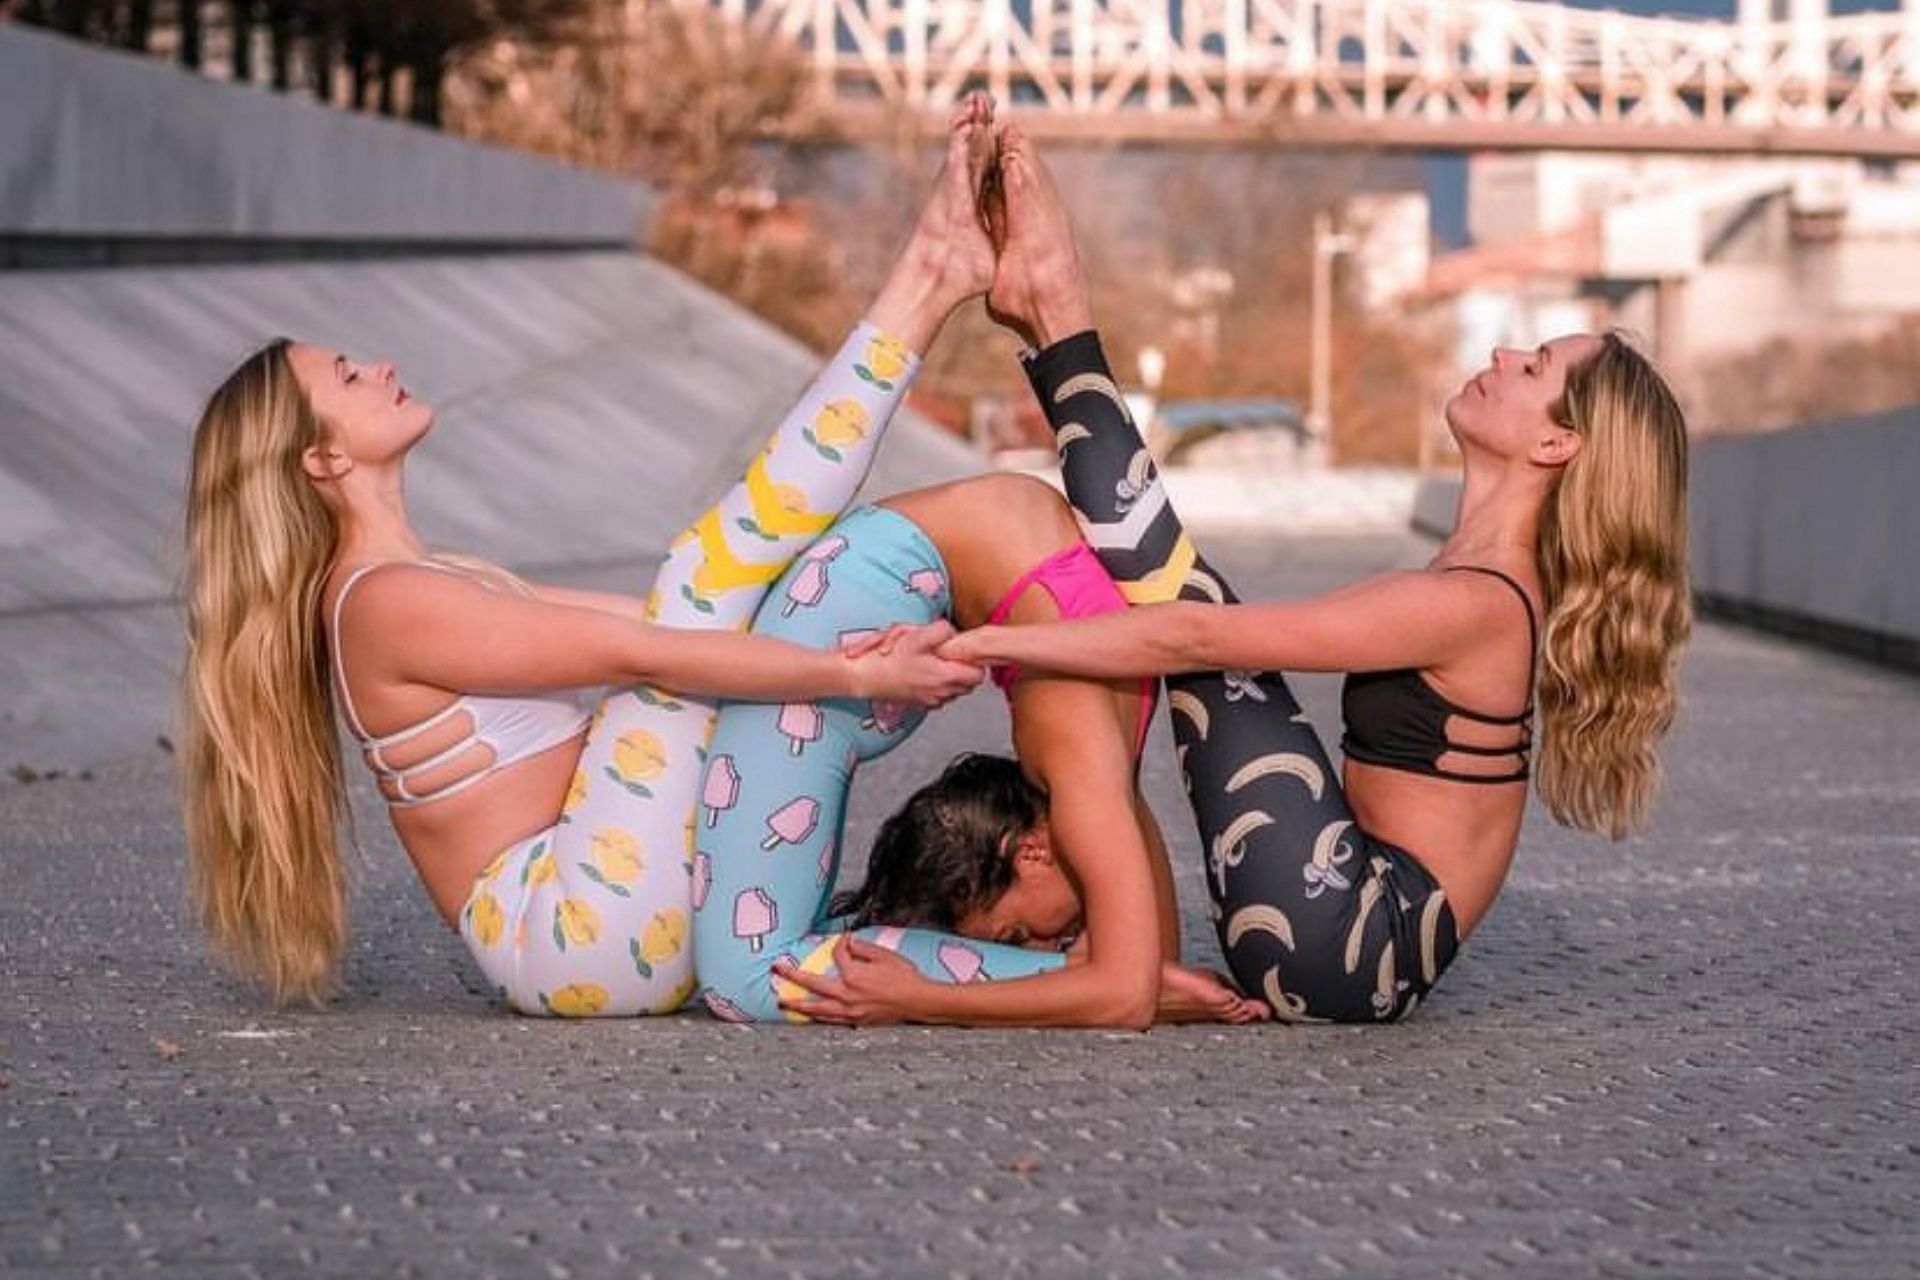 Three People Acro Yoga Pose